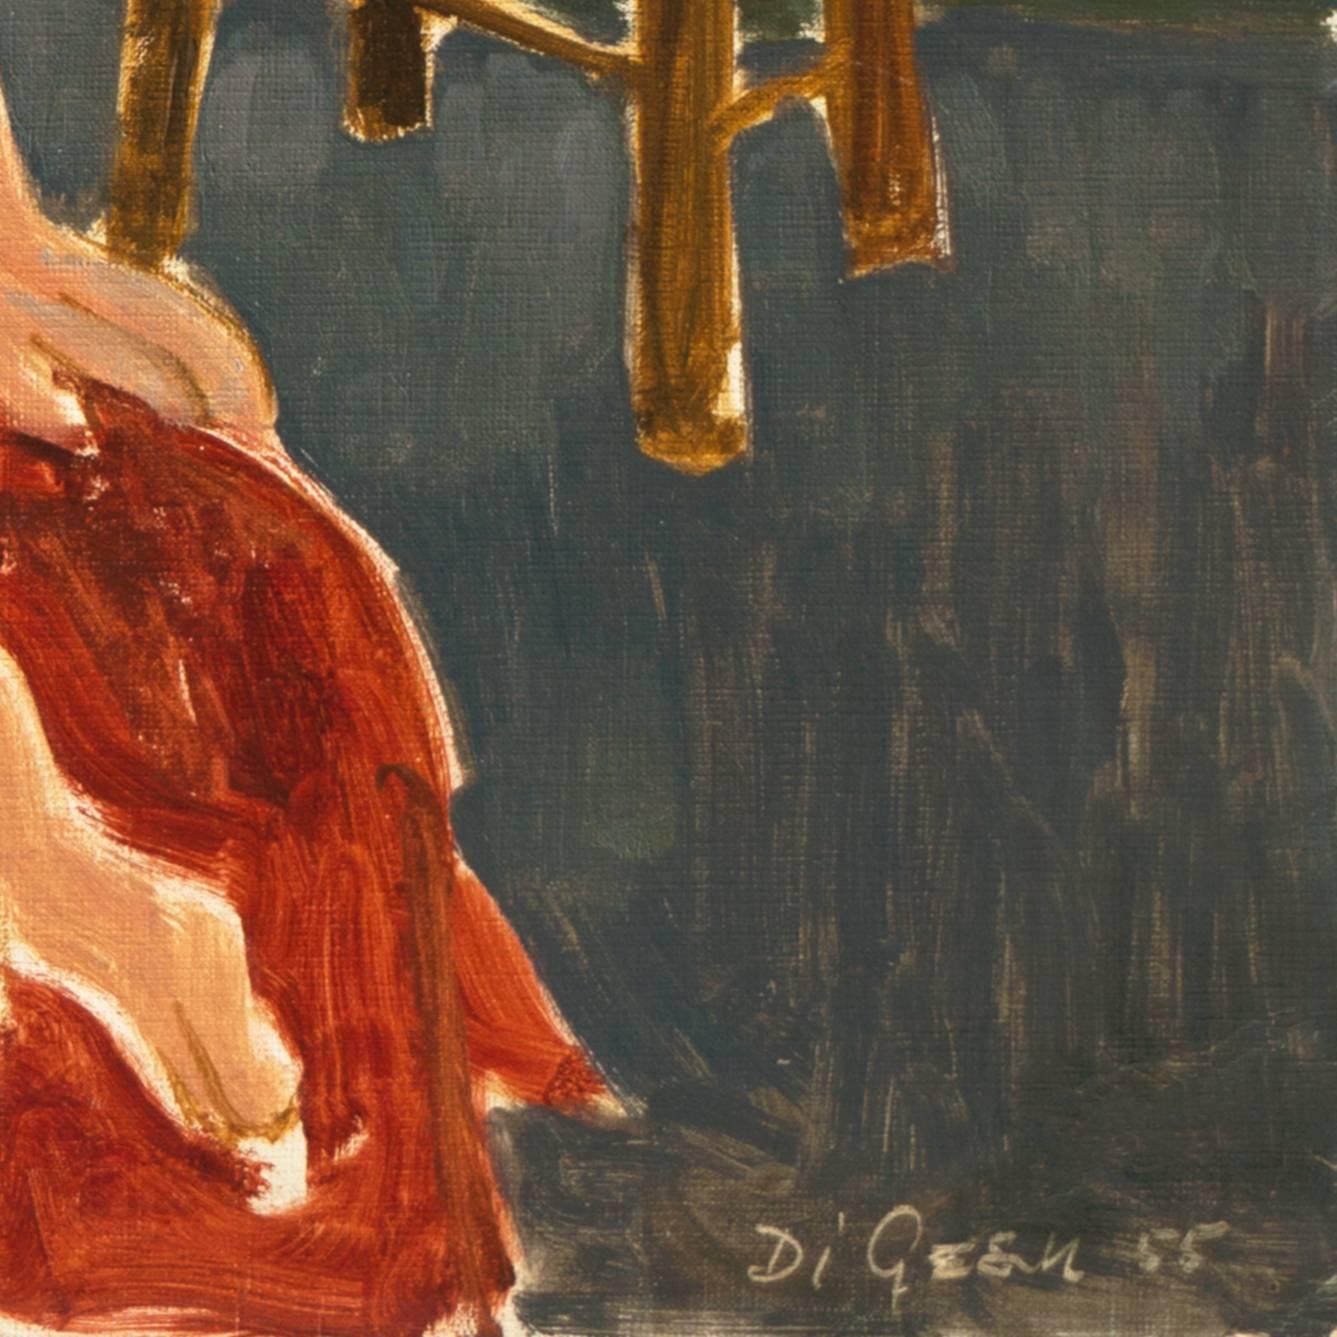 California Post-Impressionist 'Seated Nude', Louvre, Académie Chaumière, LACMA 2